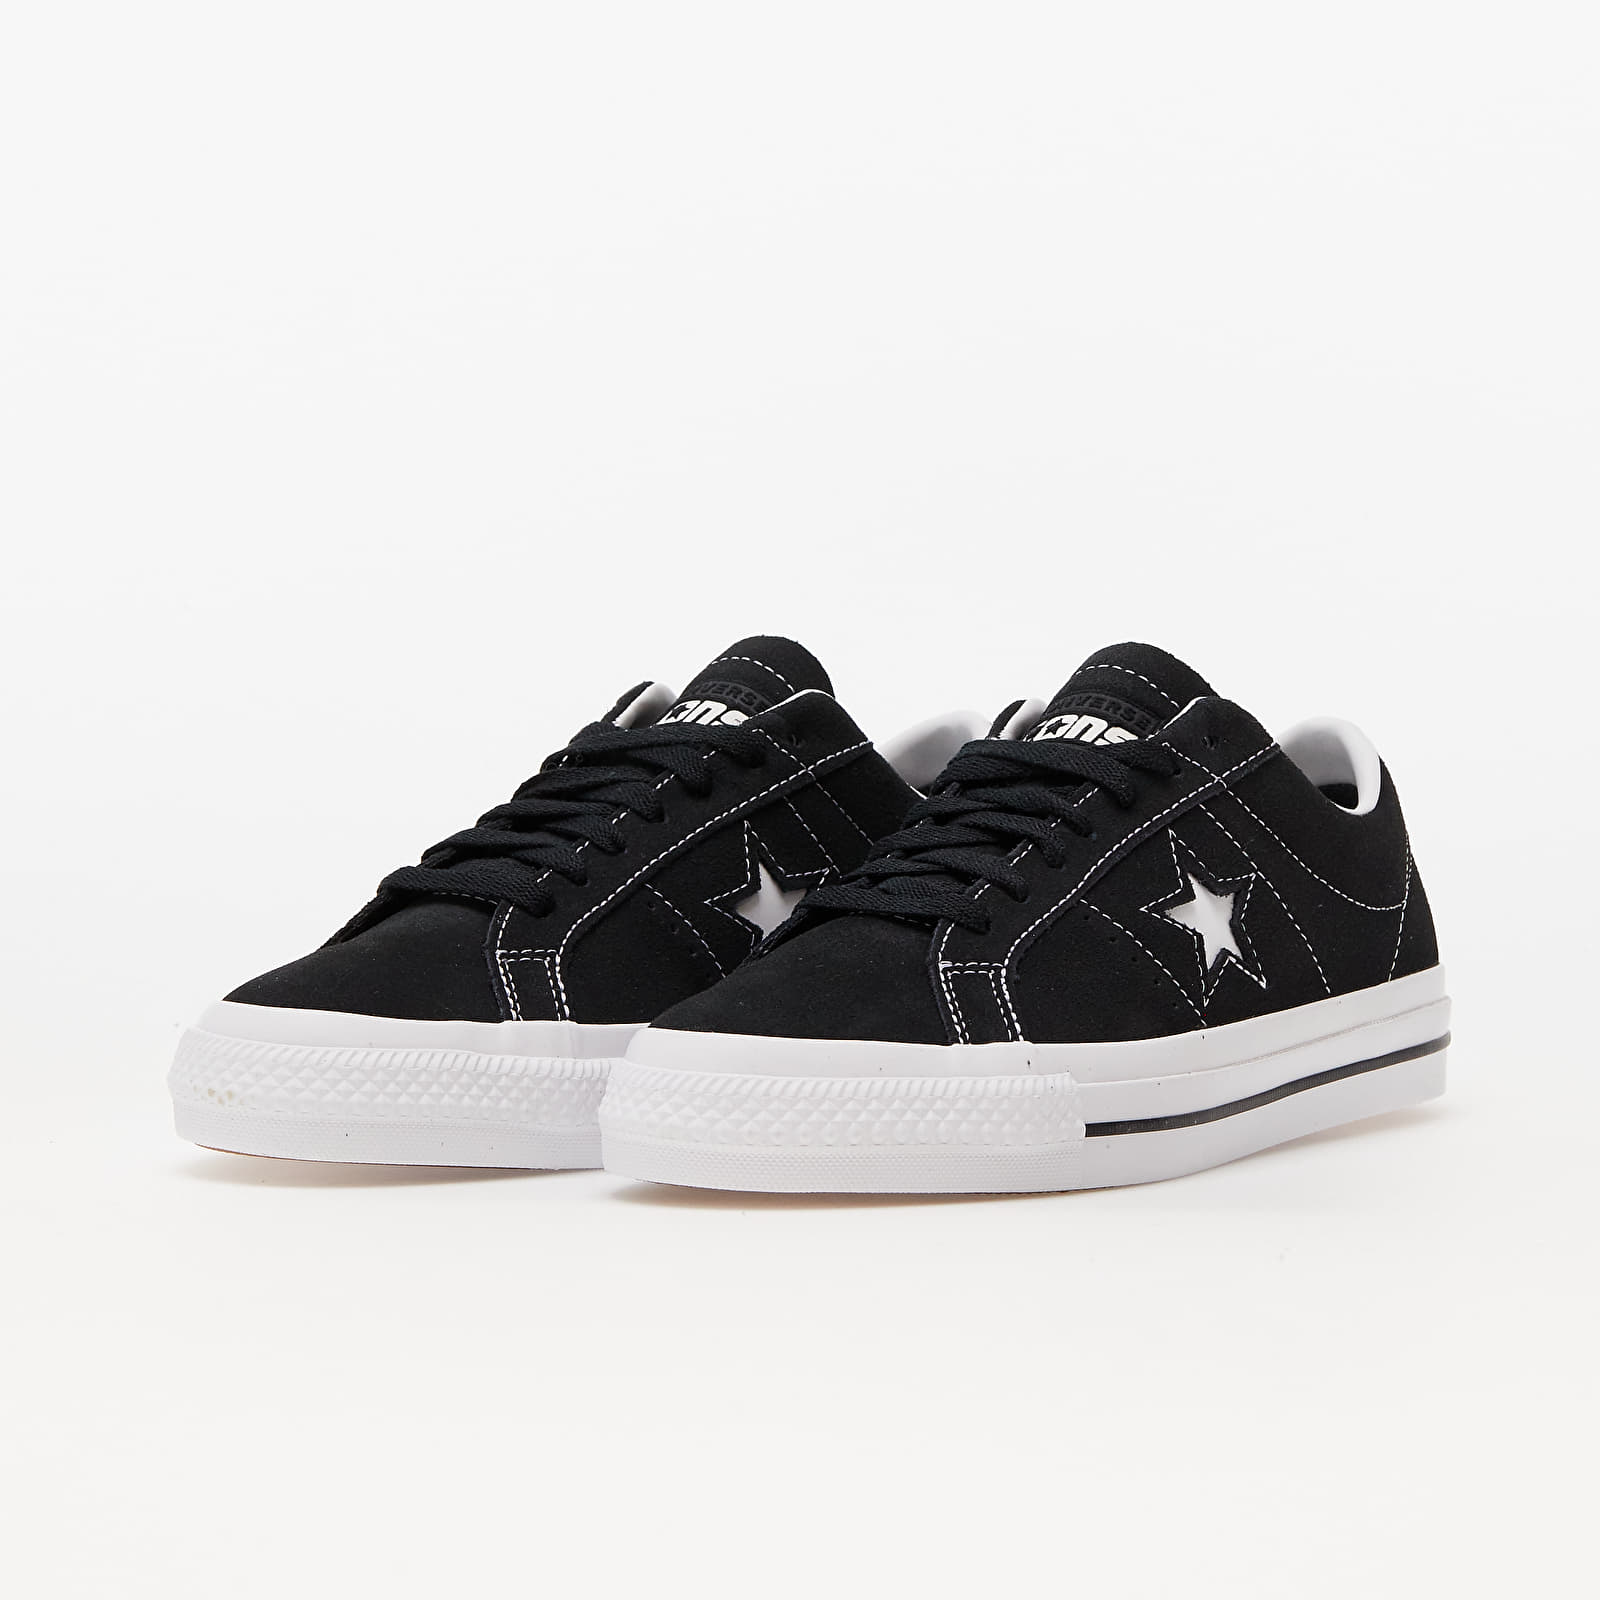 Herensneakers en -schoenen Converse Cons One Star Pro Suede Black/ Black/ White